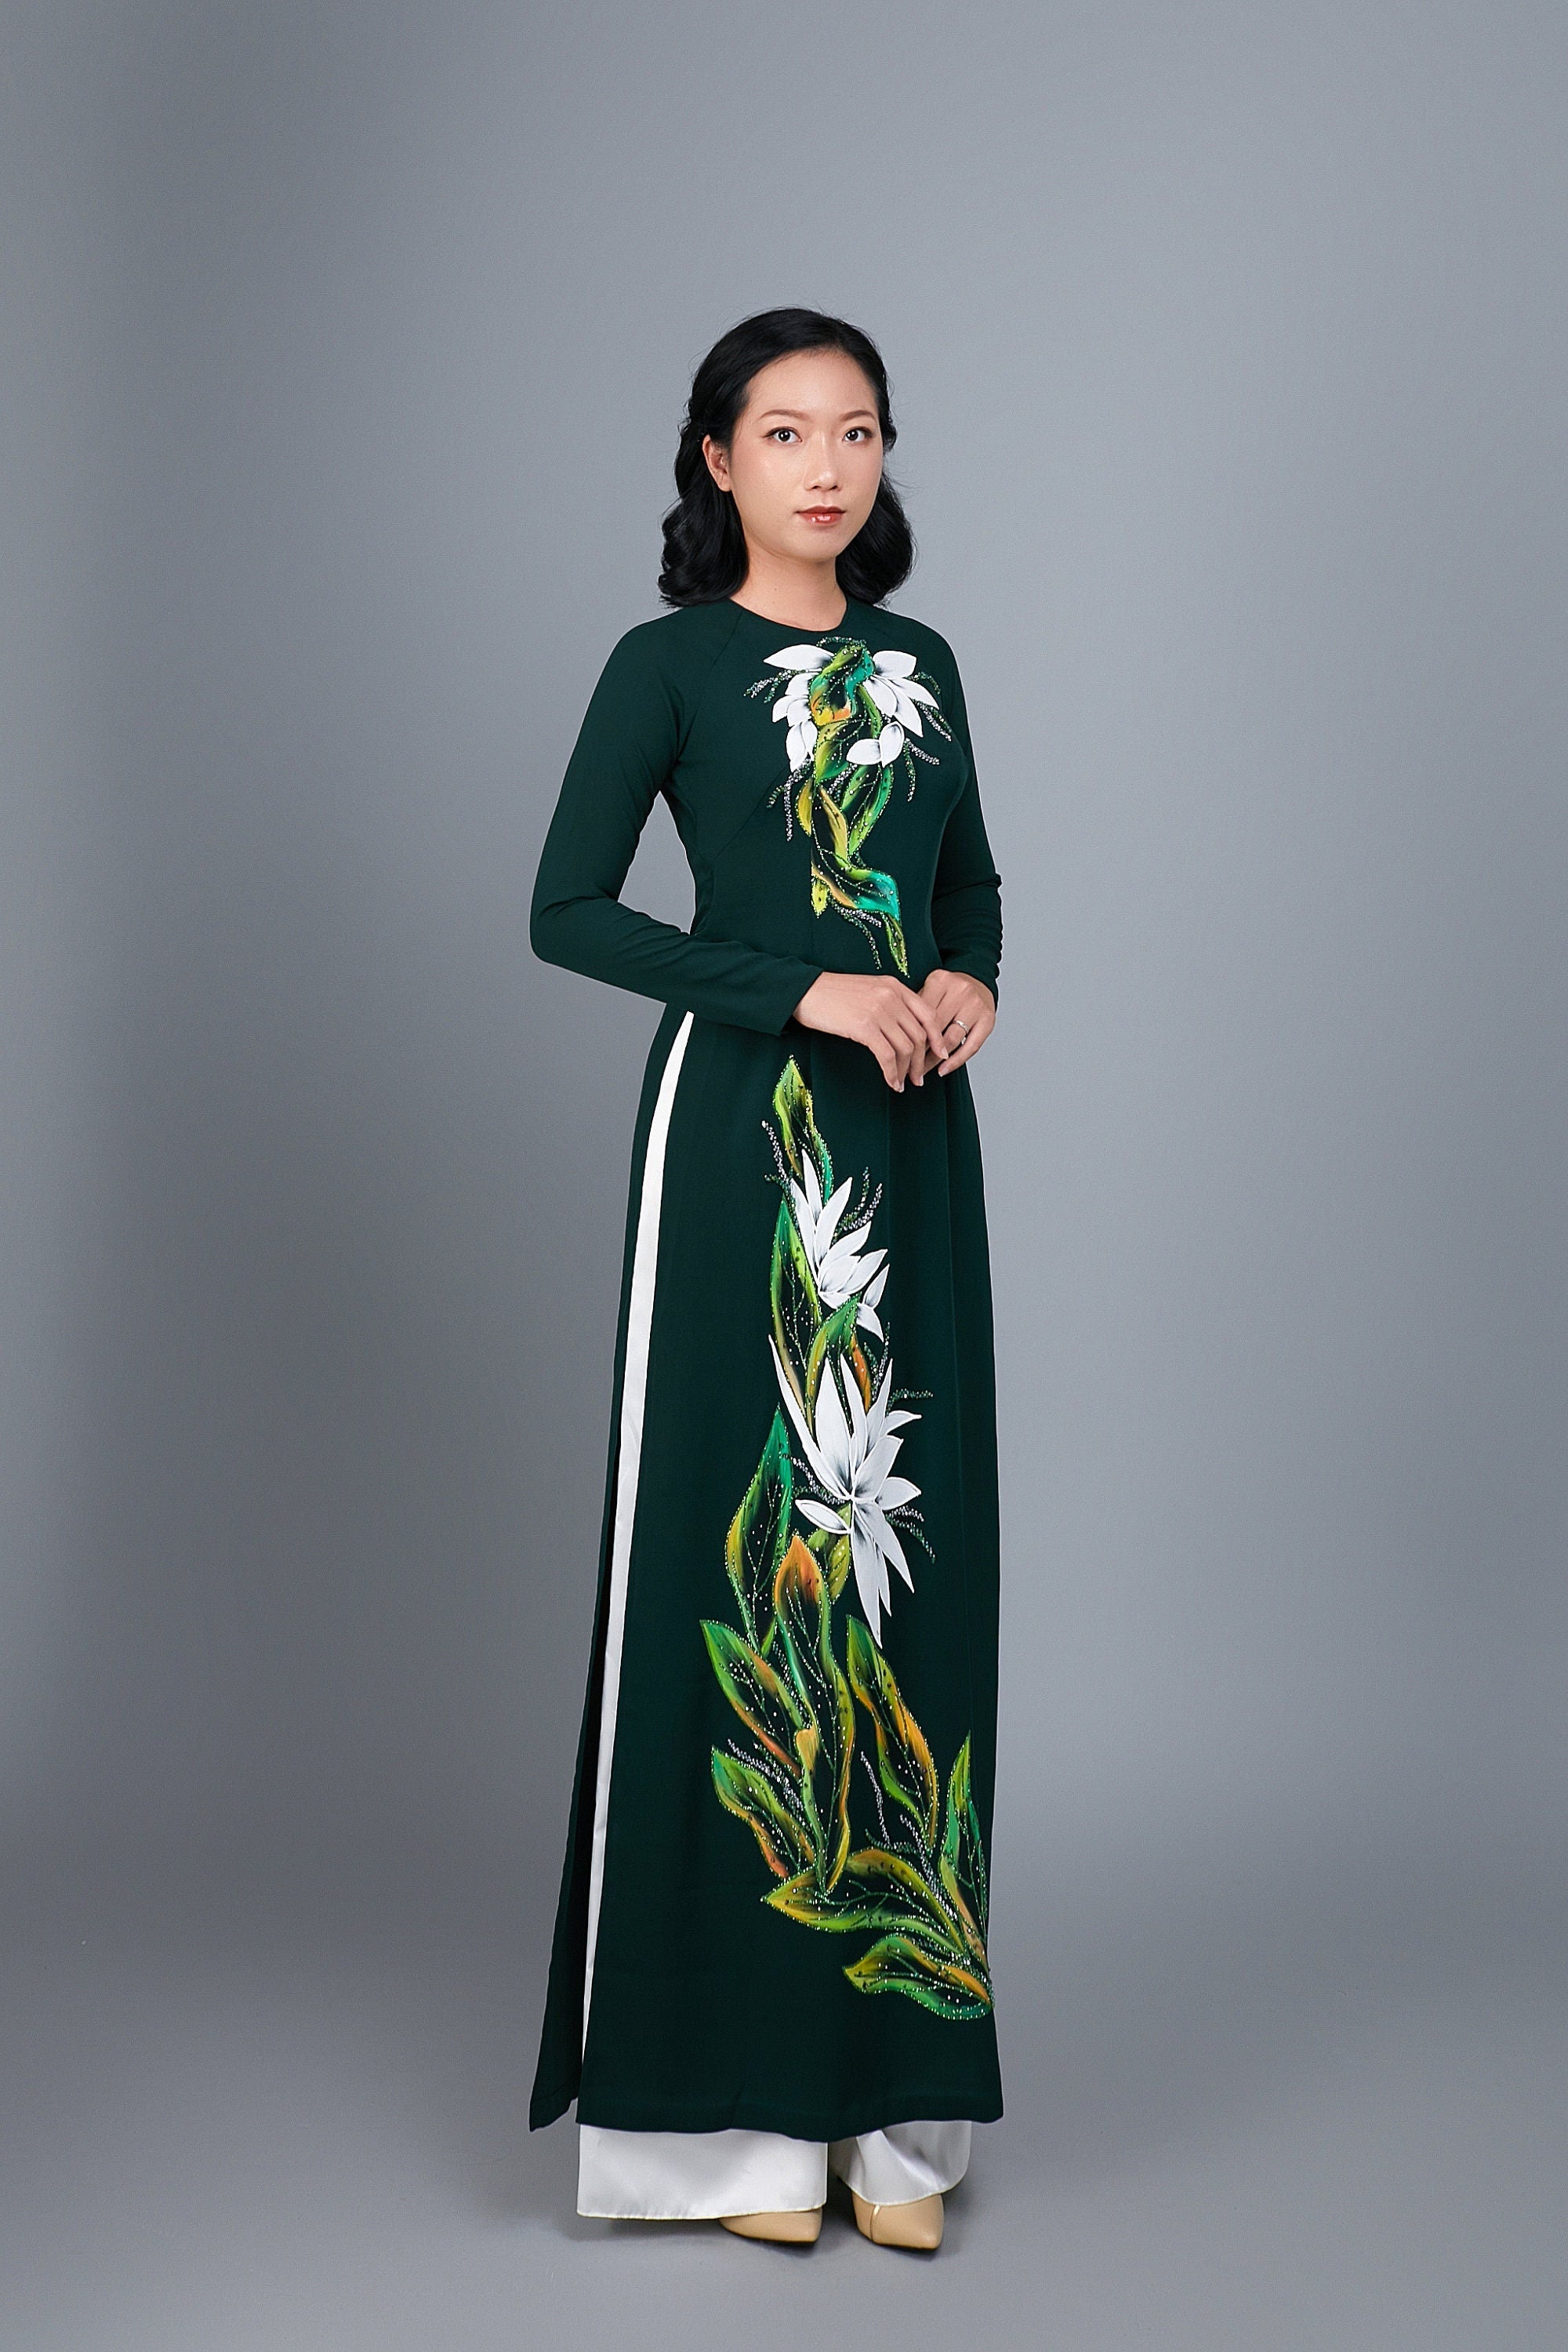 Custom made ao dai. Hand-painted, floral motif on black silk